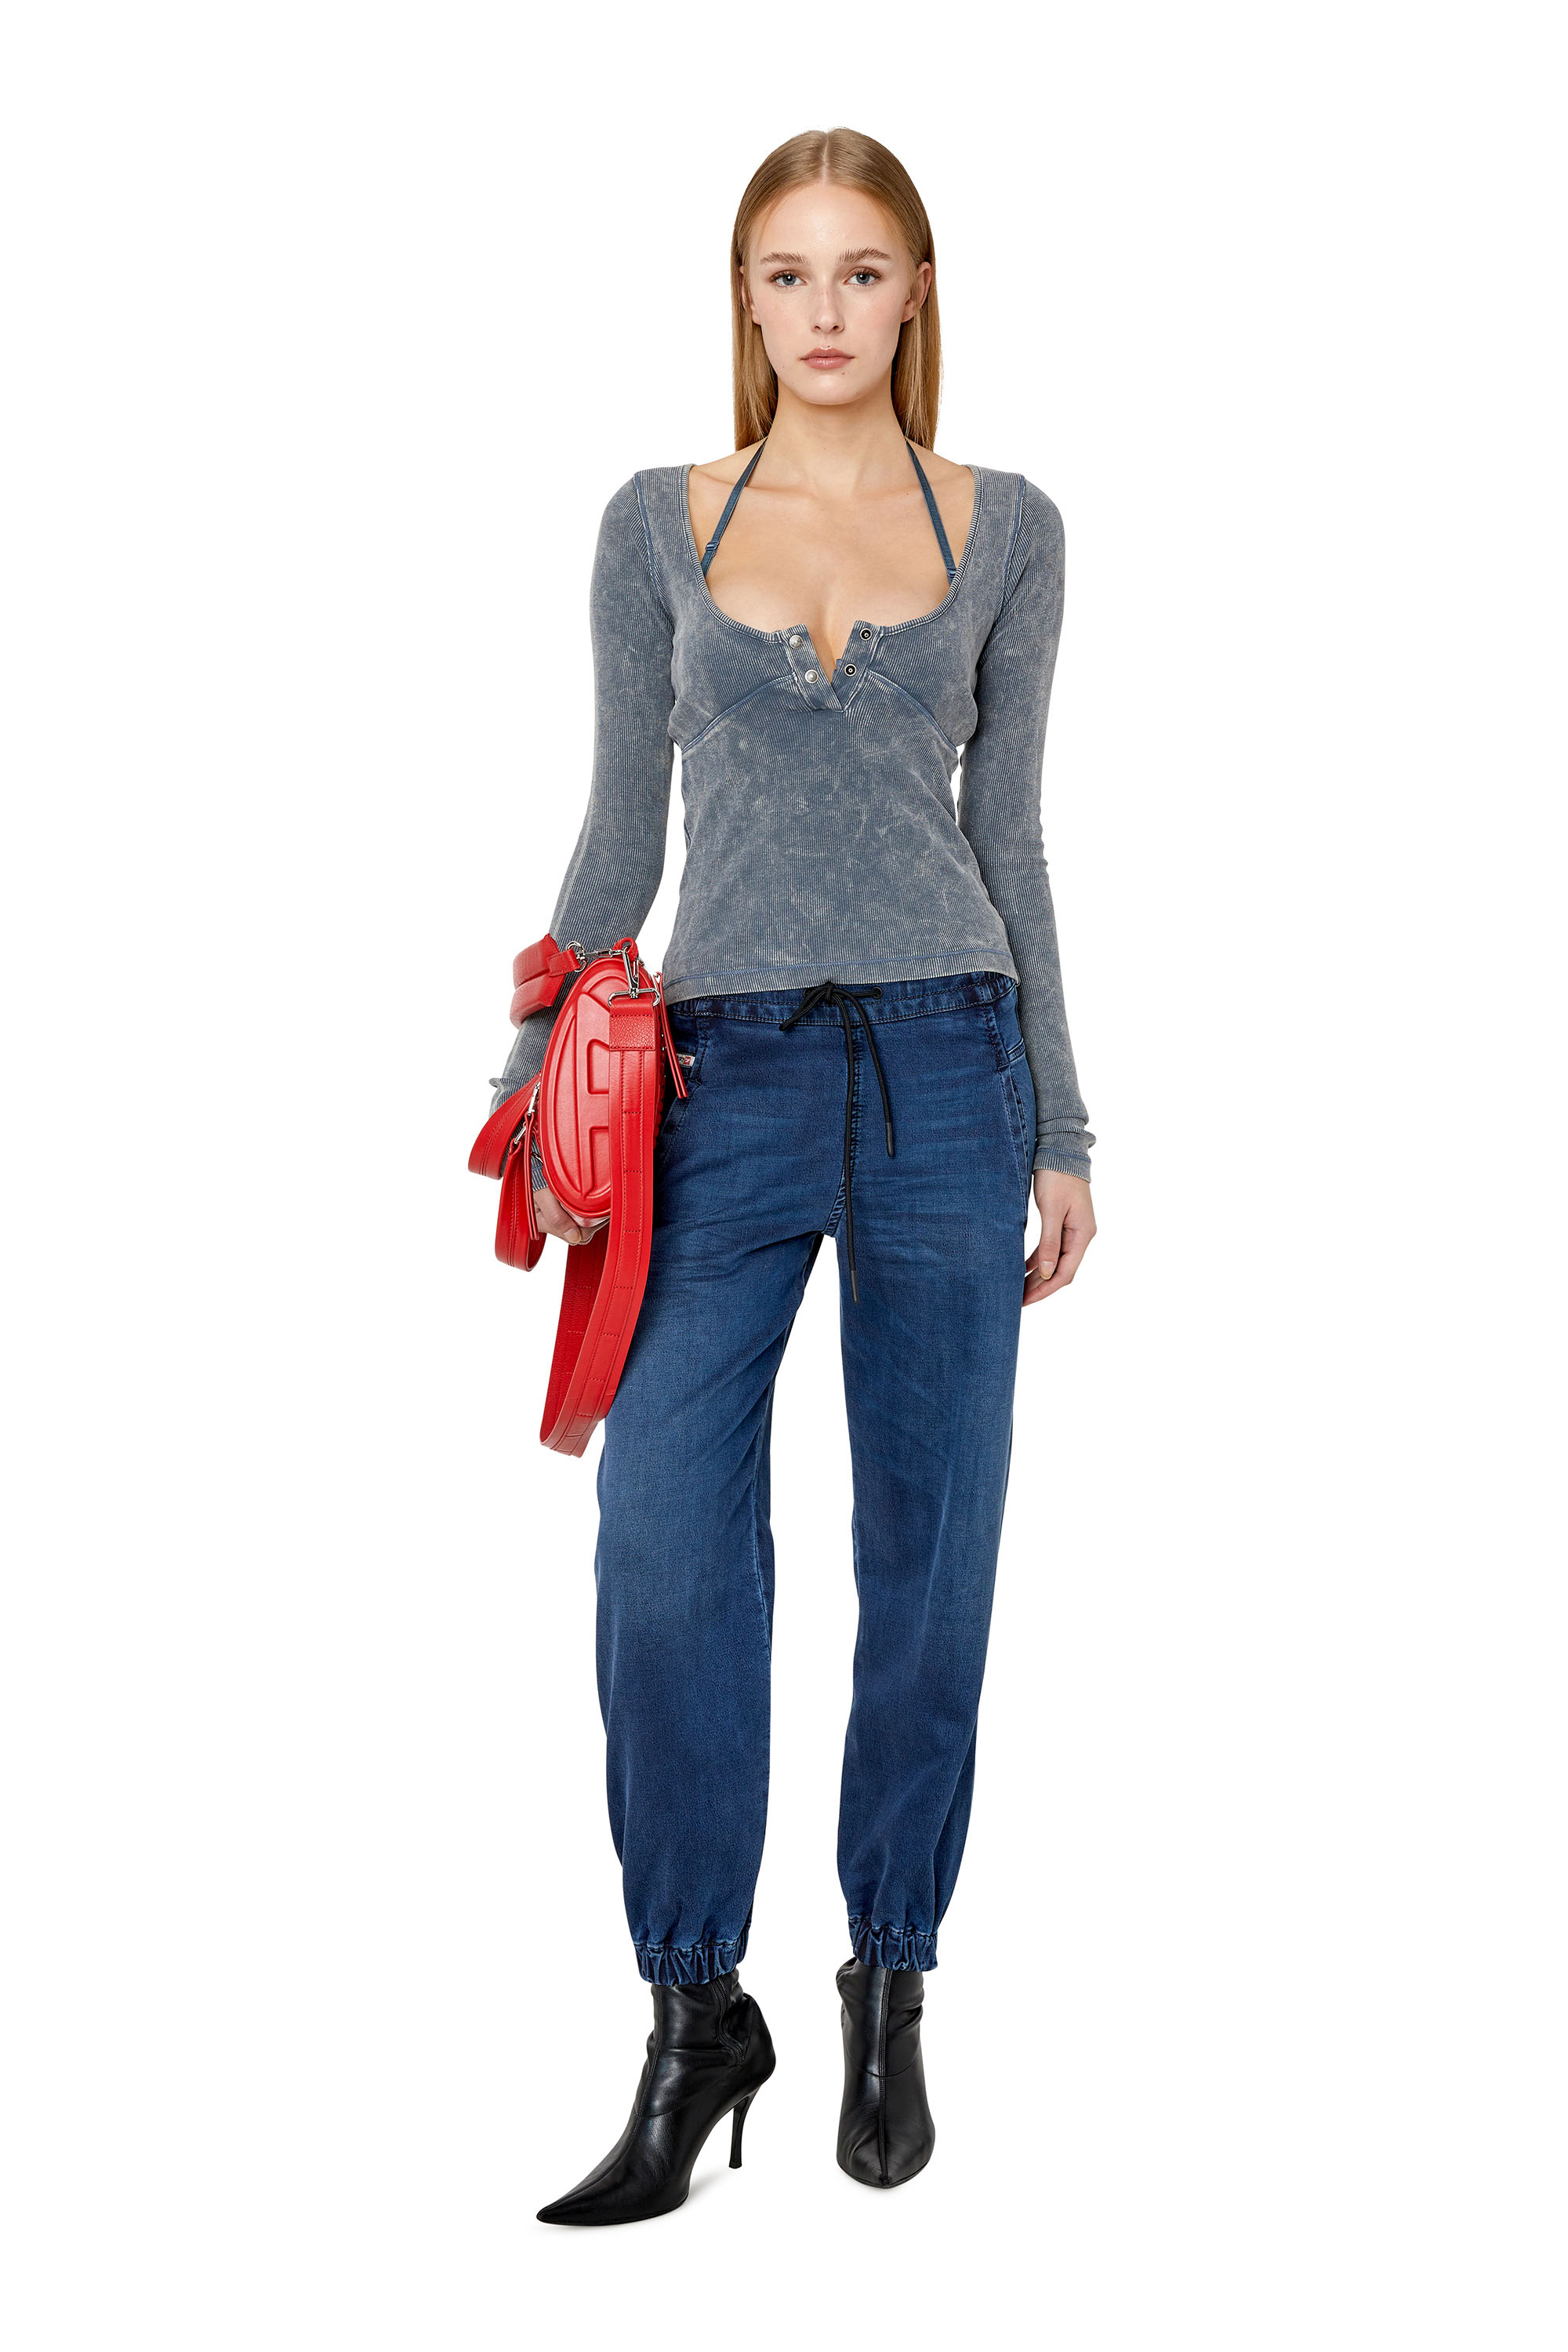 bereiken tolerantie Airco Women's JoggJeans®: High-waisted, baggy, tapered jeans | Diesel®